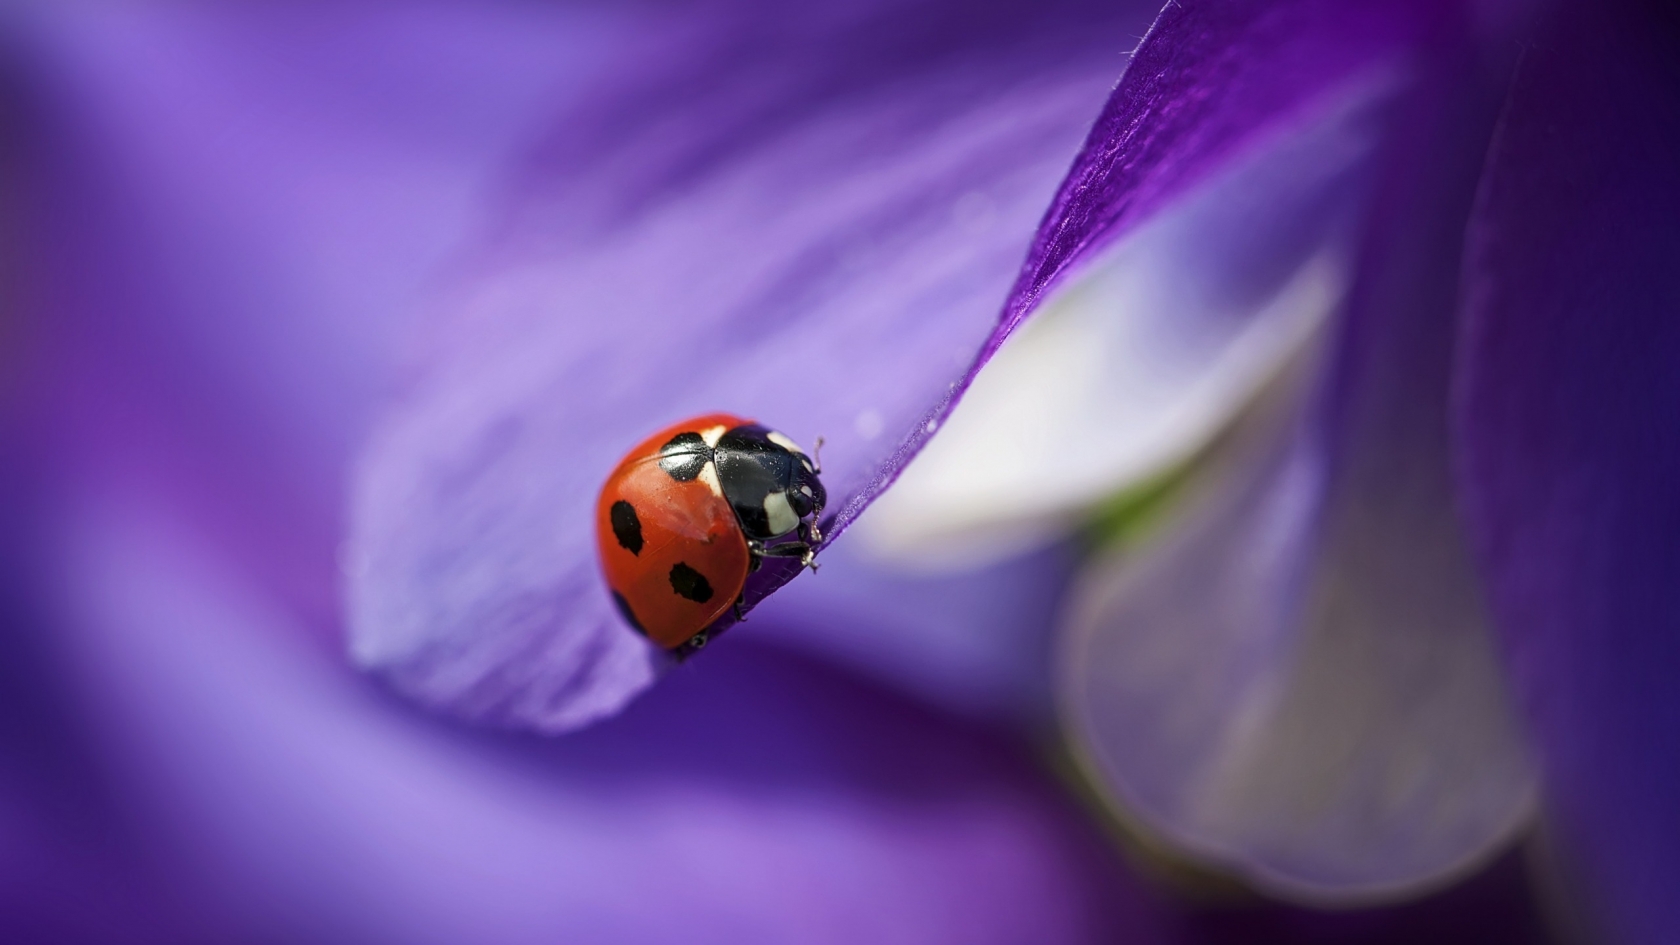 Ladybug on Purple Petal for 1680 x 945 HDTV resolution